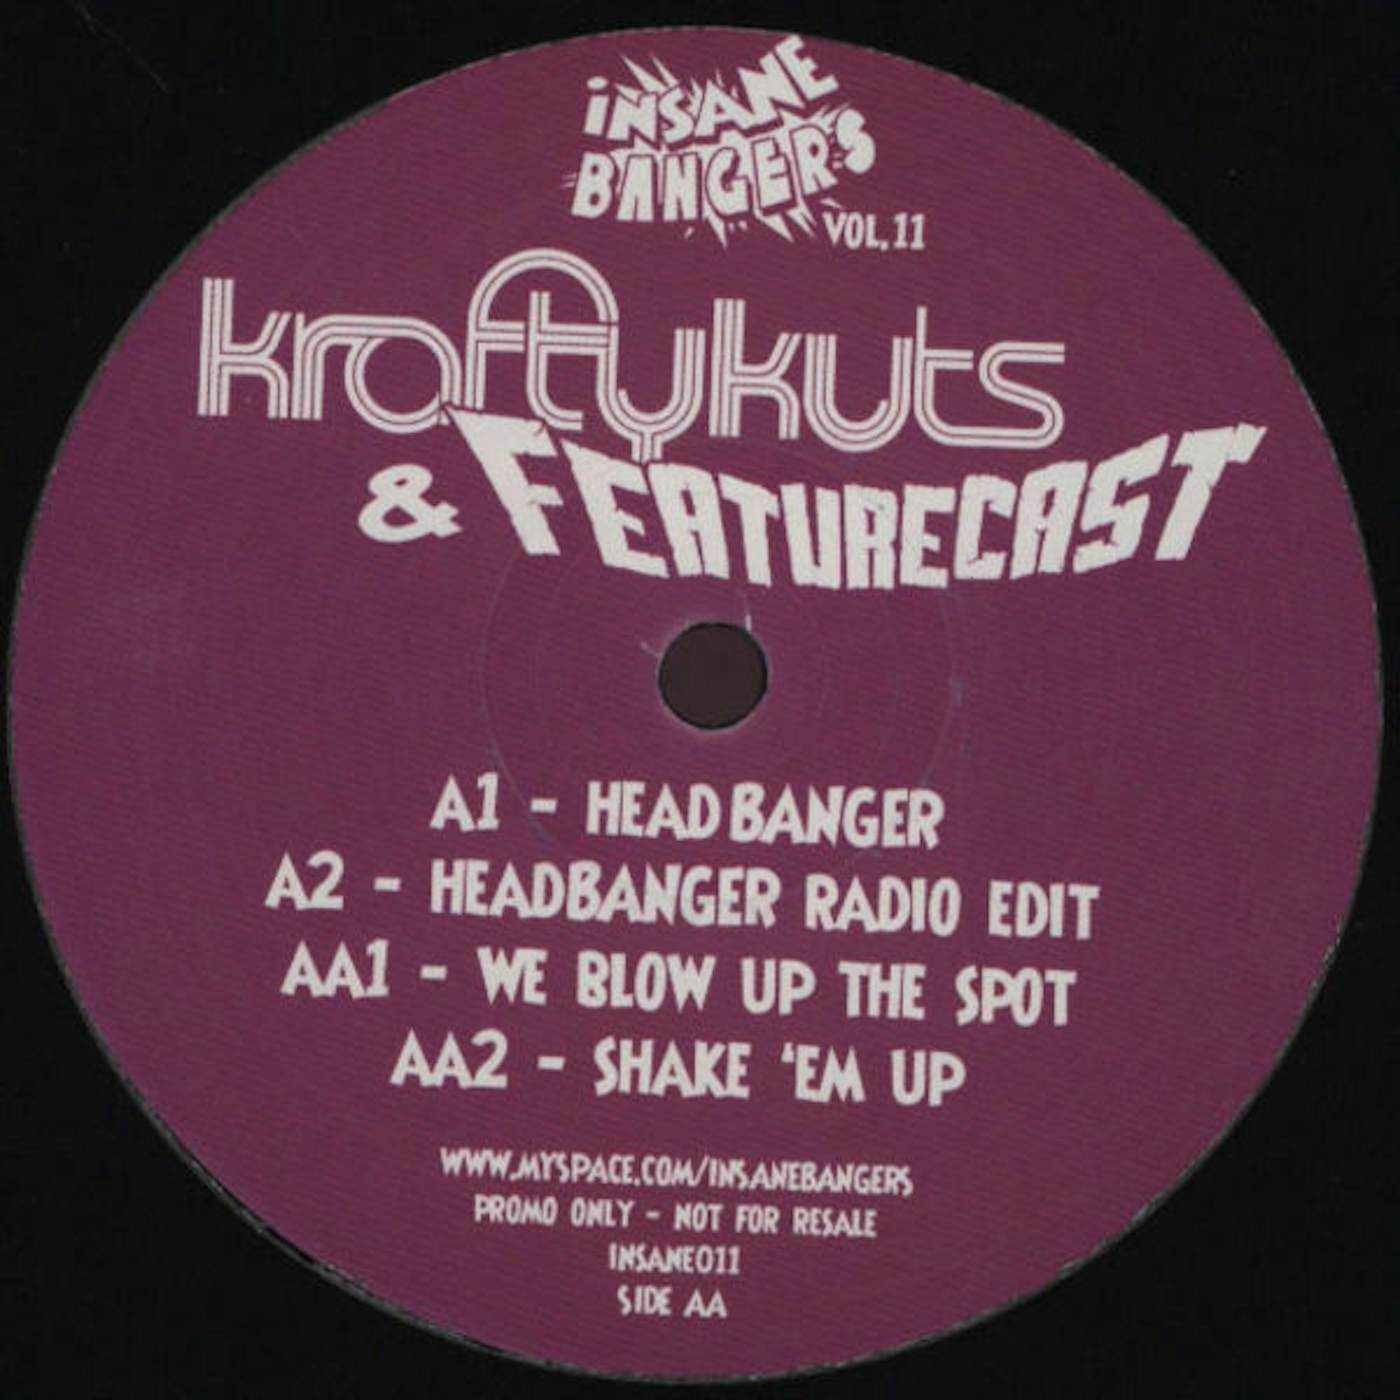 Krafty Kuts & Featurecast VOL. 11-INSANE BANGERS Vinyl Record - UK Release